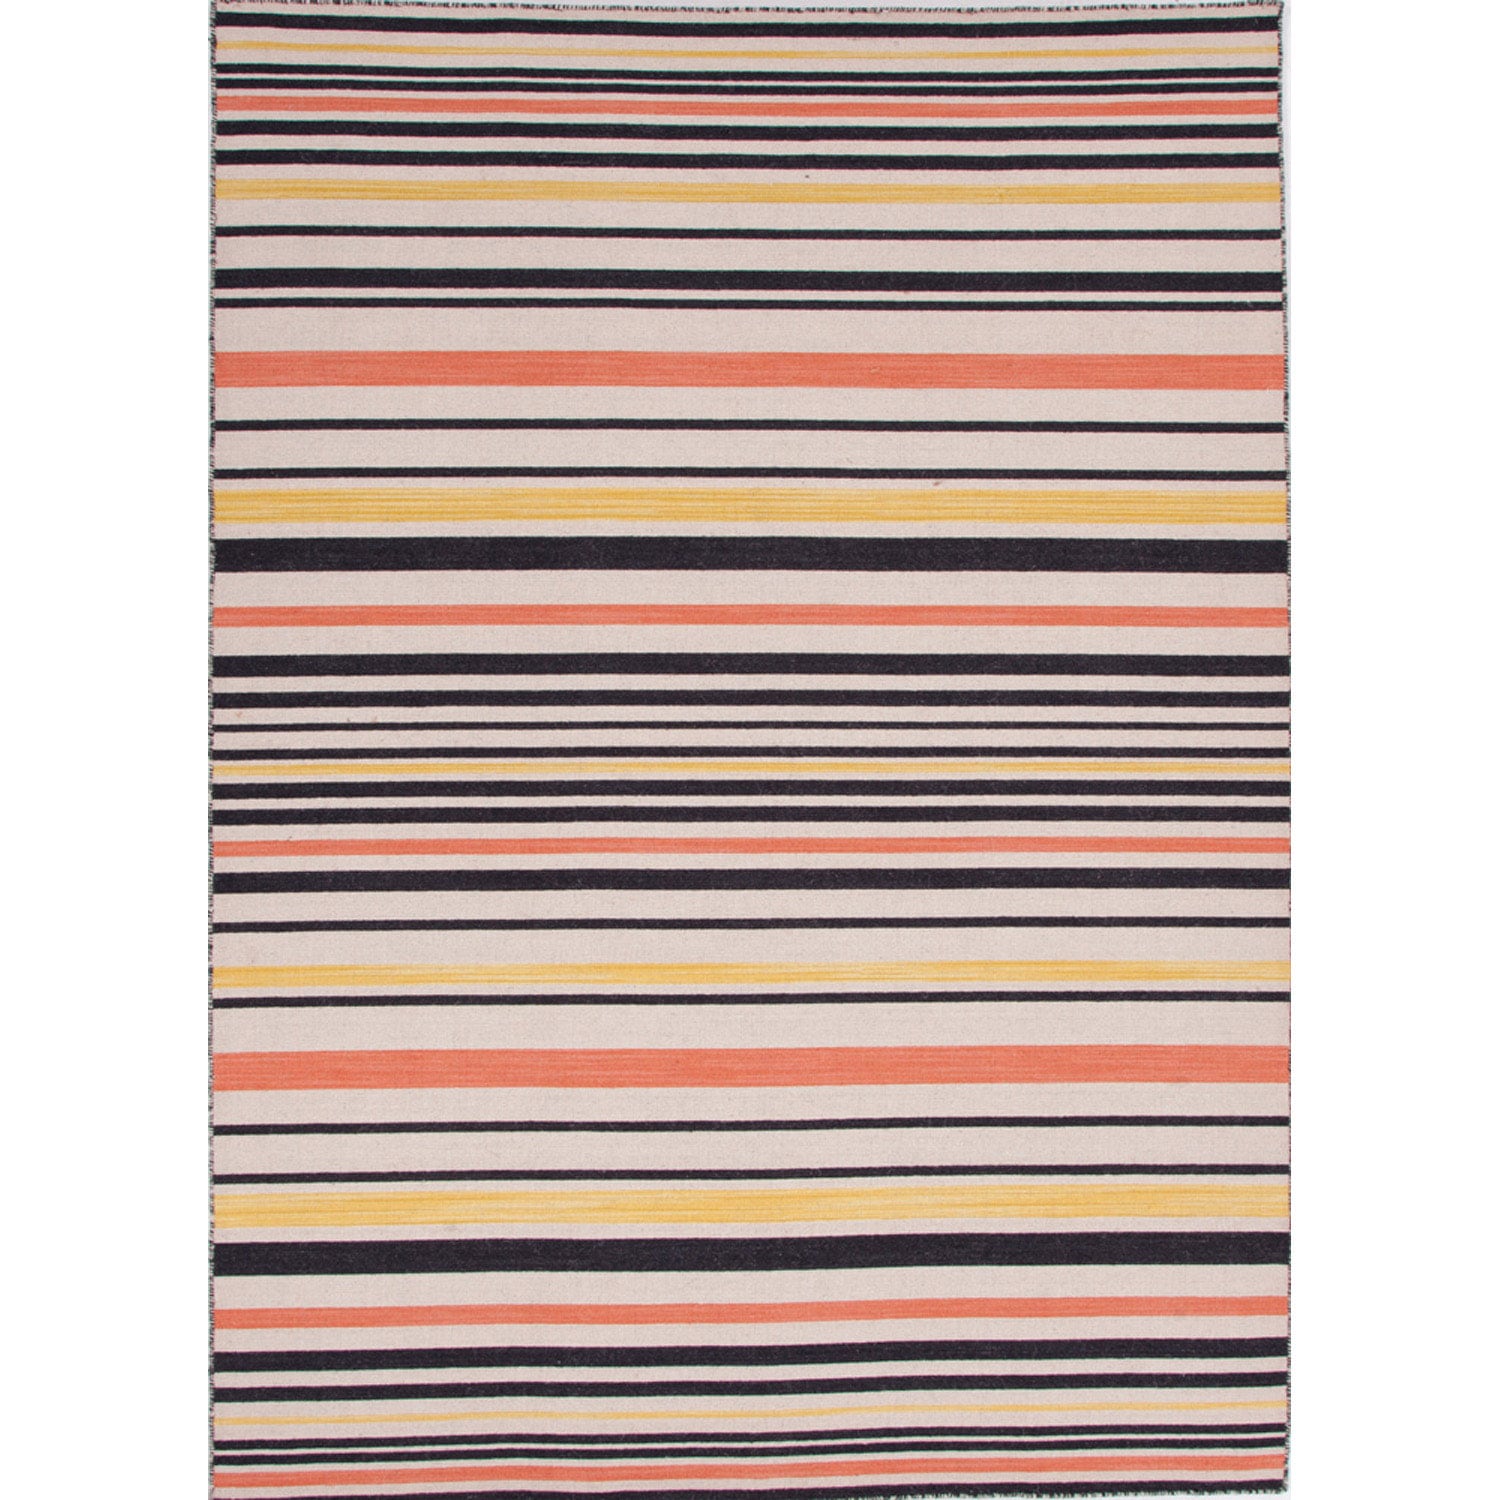 Handmade Flat weave Stripe pattern Multicolored Area Rug (10 X 14)